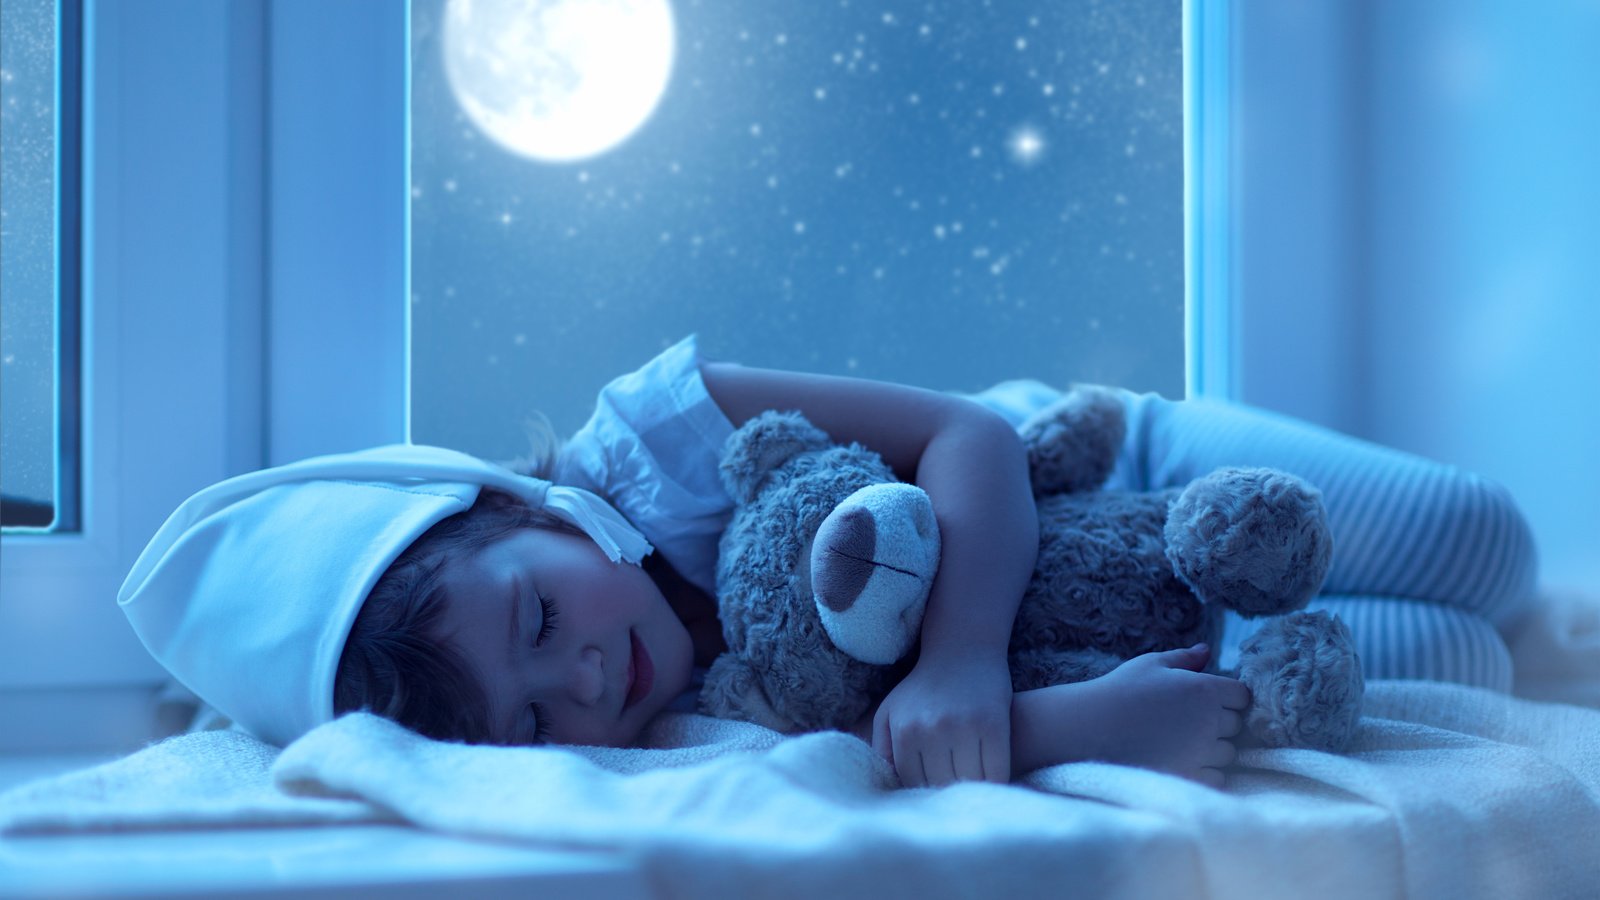 Обои ночь, сон, мишка, игрушка, ребенок, окно, подоконник, пижама, night, sleep, bear, toy, child, window, sill, pajamas разрешение 5000x3455 Загрузить